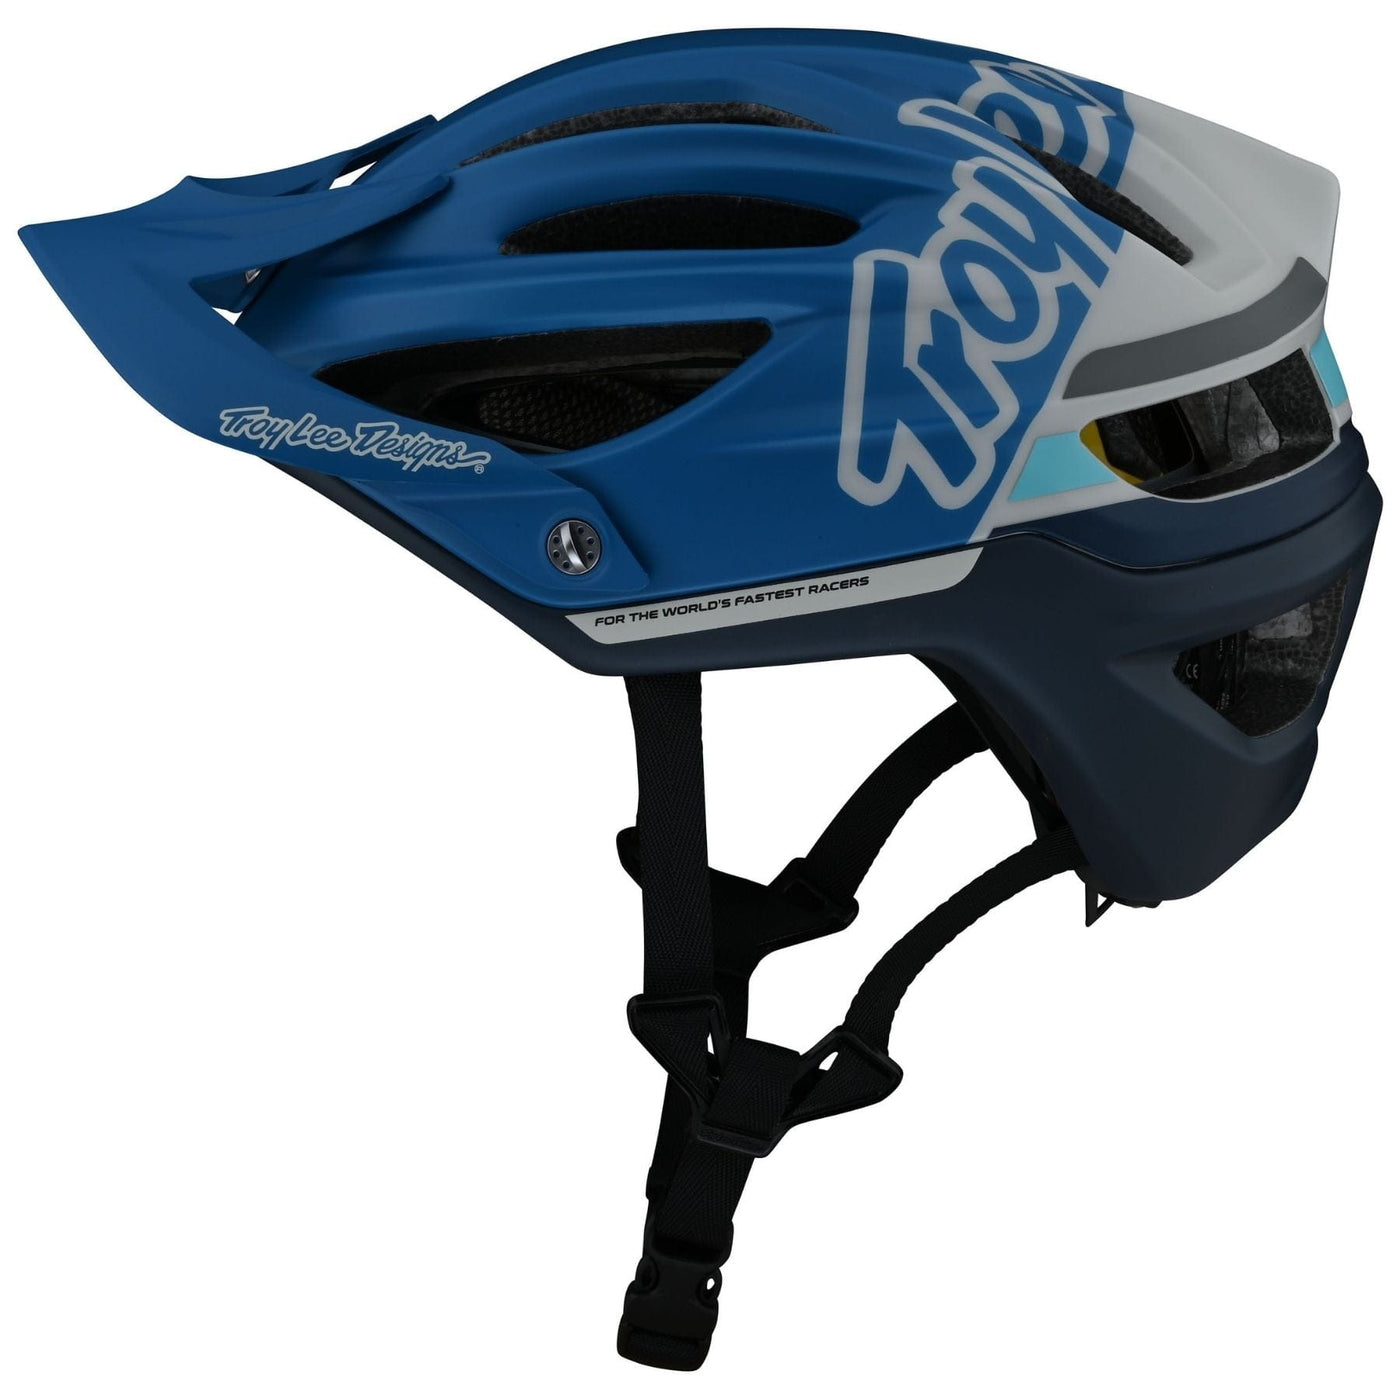 Troy Lee Designs A2 MIPS Bike Helmet Silhouette - Blue 8Lines Shop - Fast Shipping